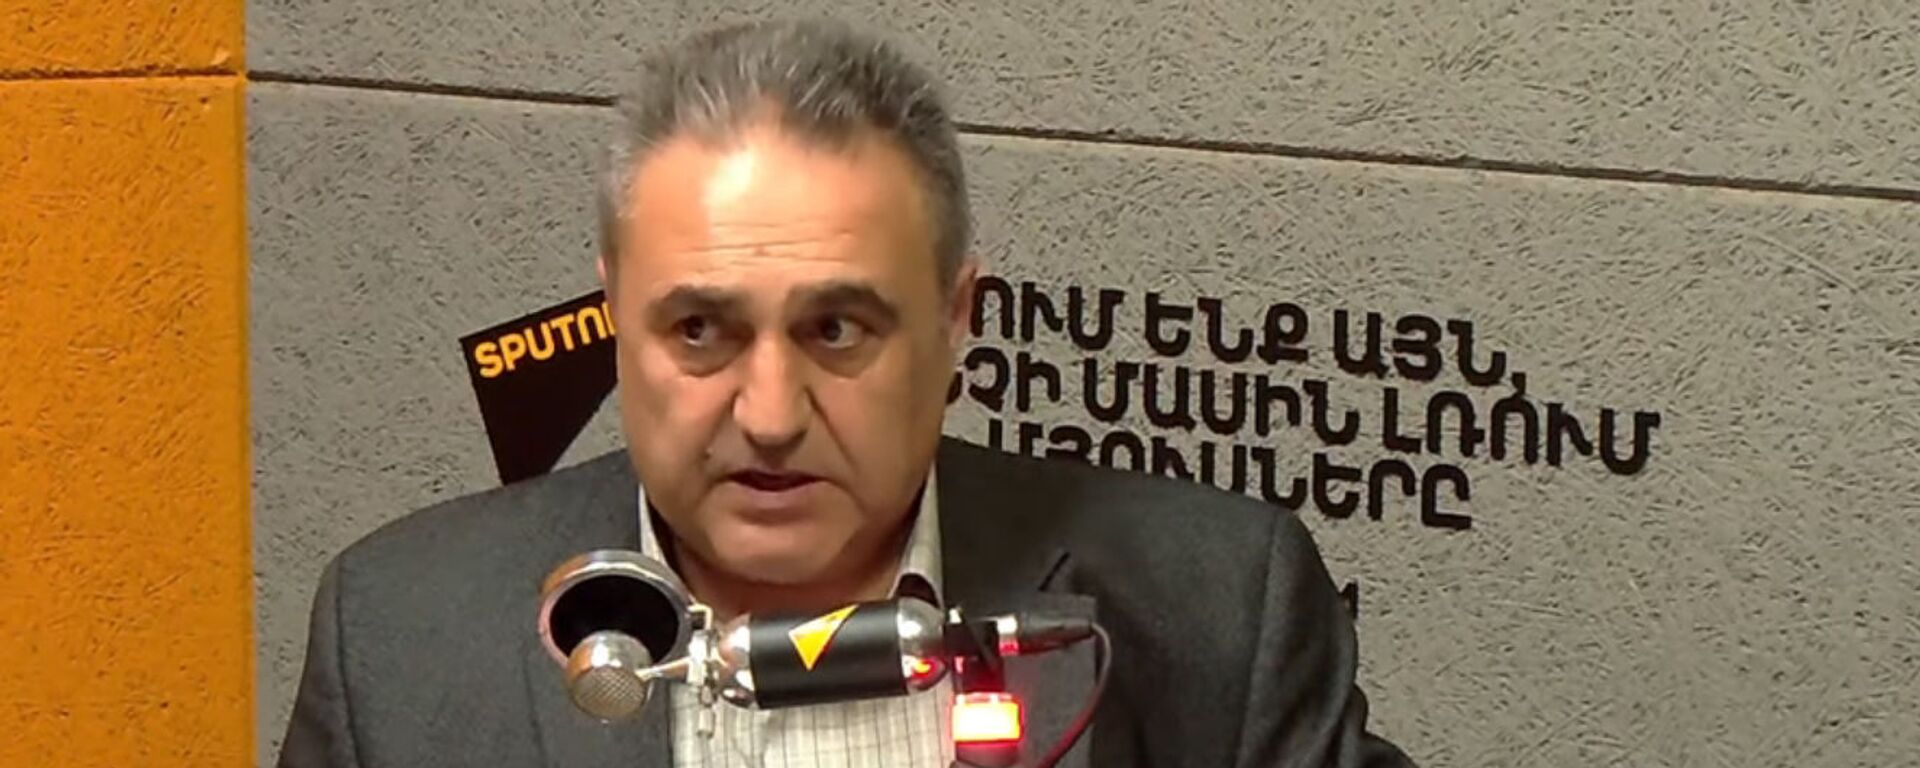 Политолог Армен Багдасарян в гостях радио Sputnik Армения - Sputnik Արմենիա, 1920, 19.07.2021